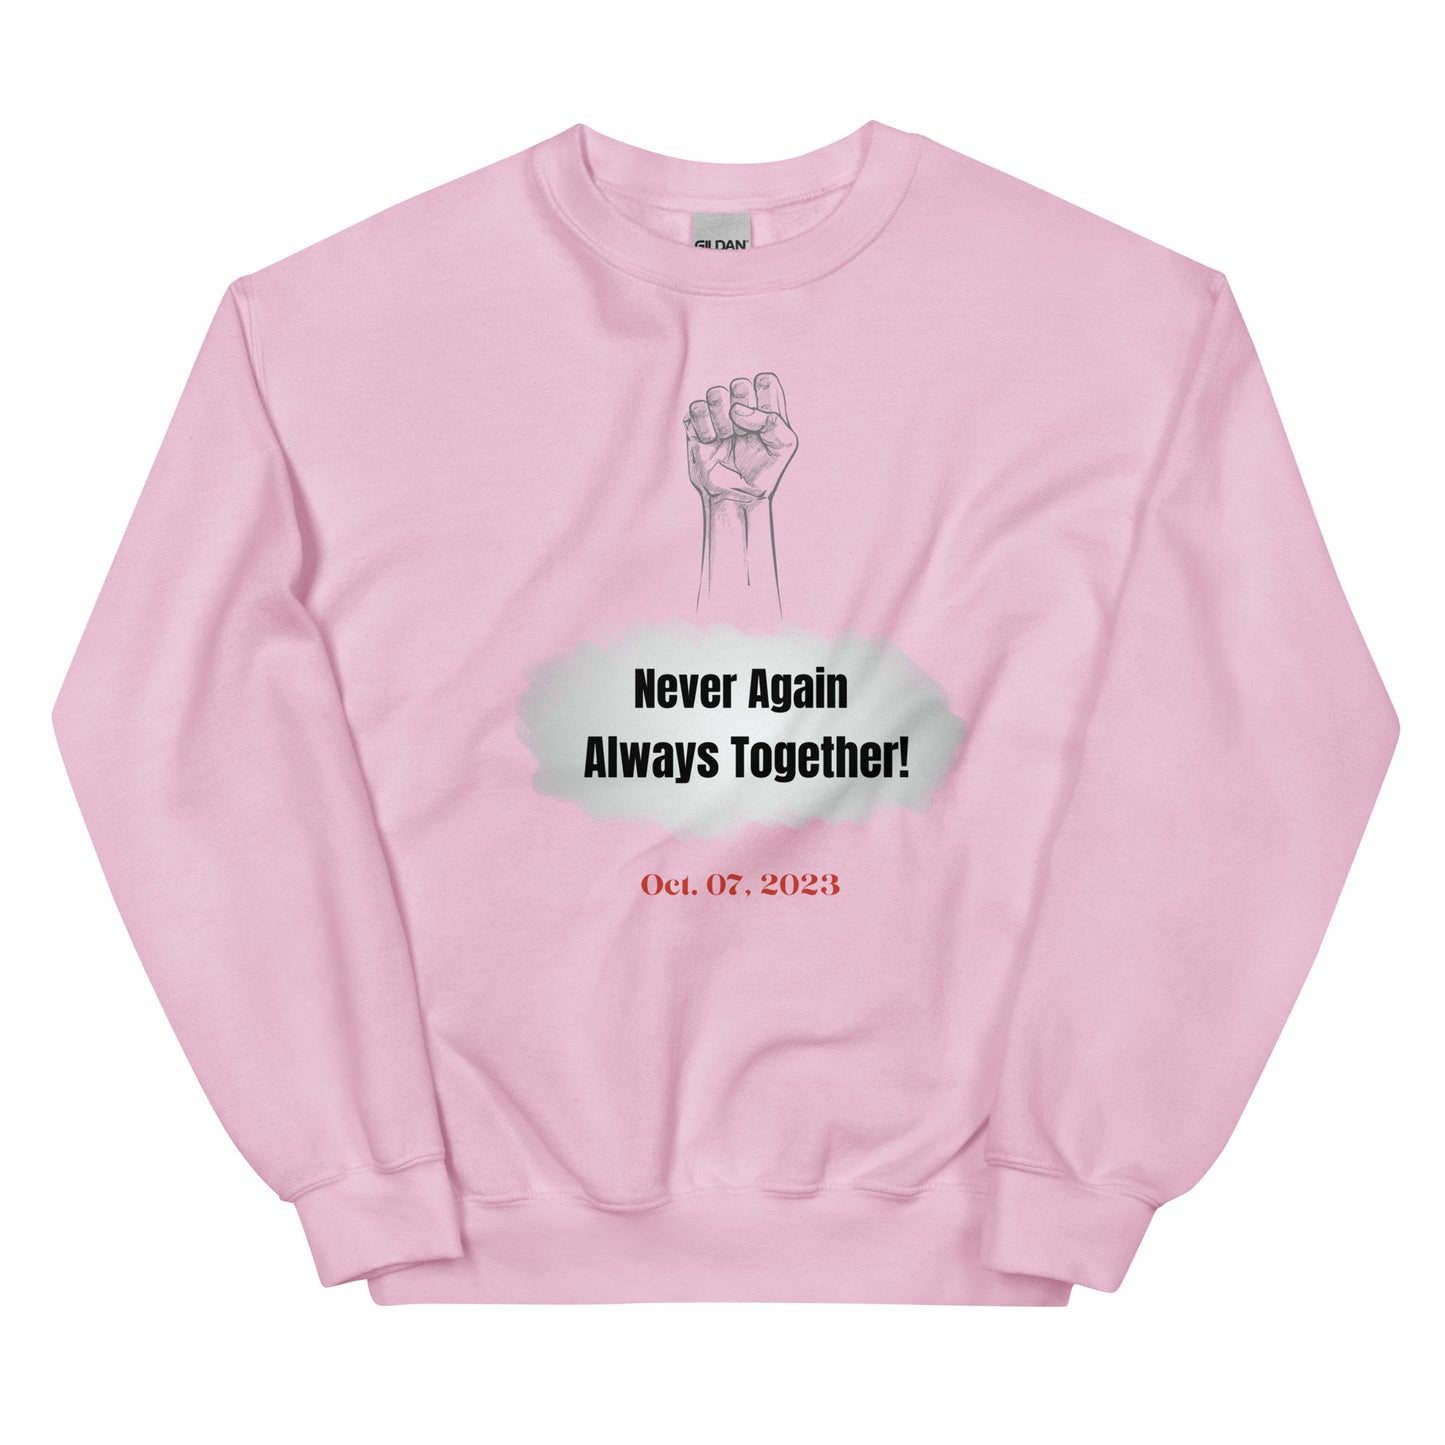 Never again. Always together - Unisex Sweatshirt (10 colors)